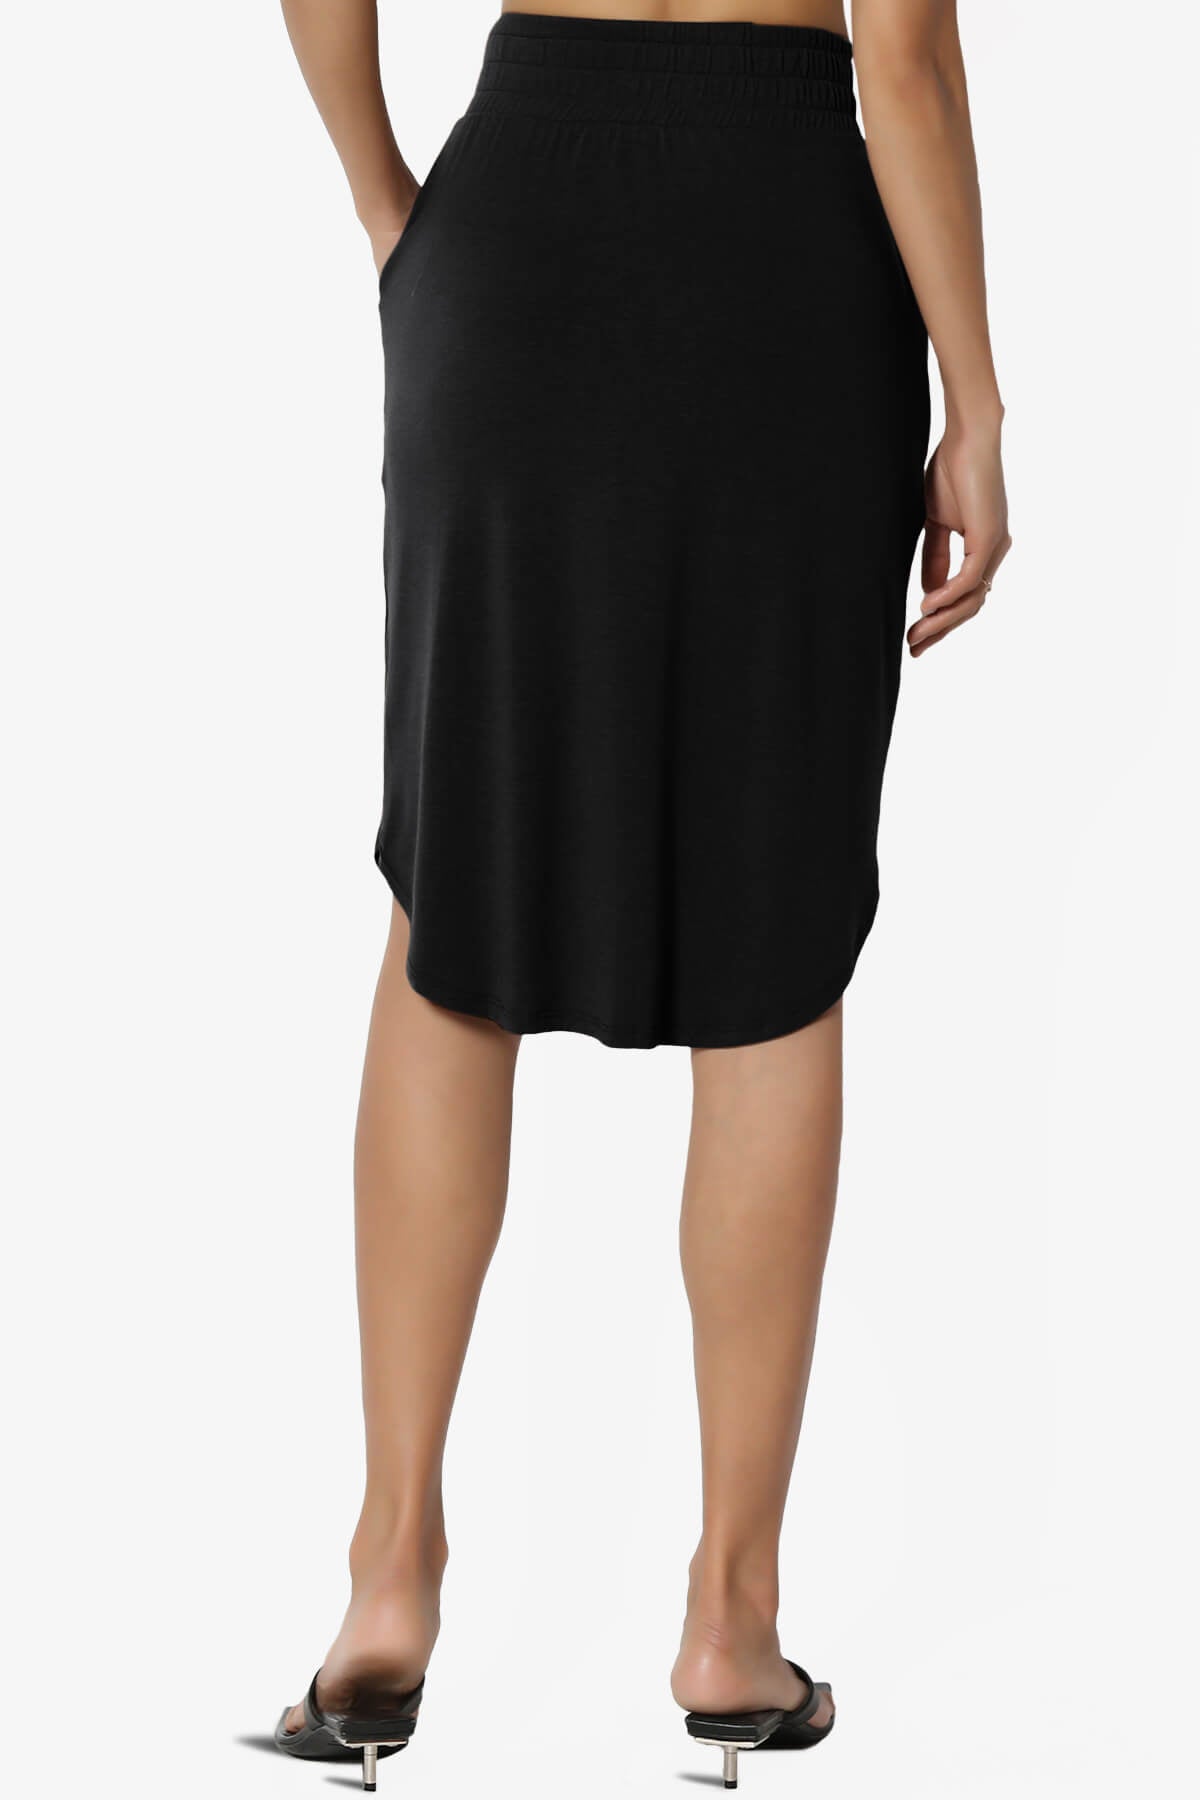 Hadyn Casual Elastic High Waist Straight Skirt BLACK_2